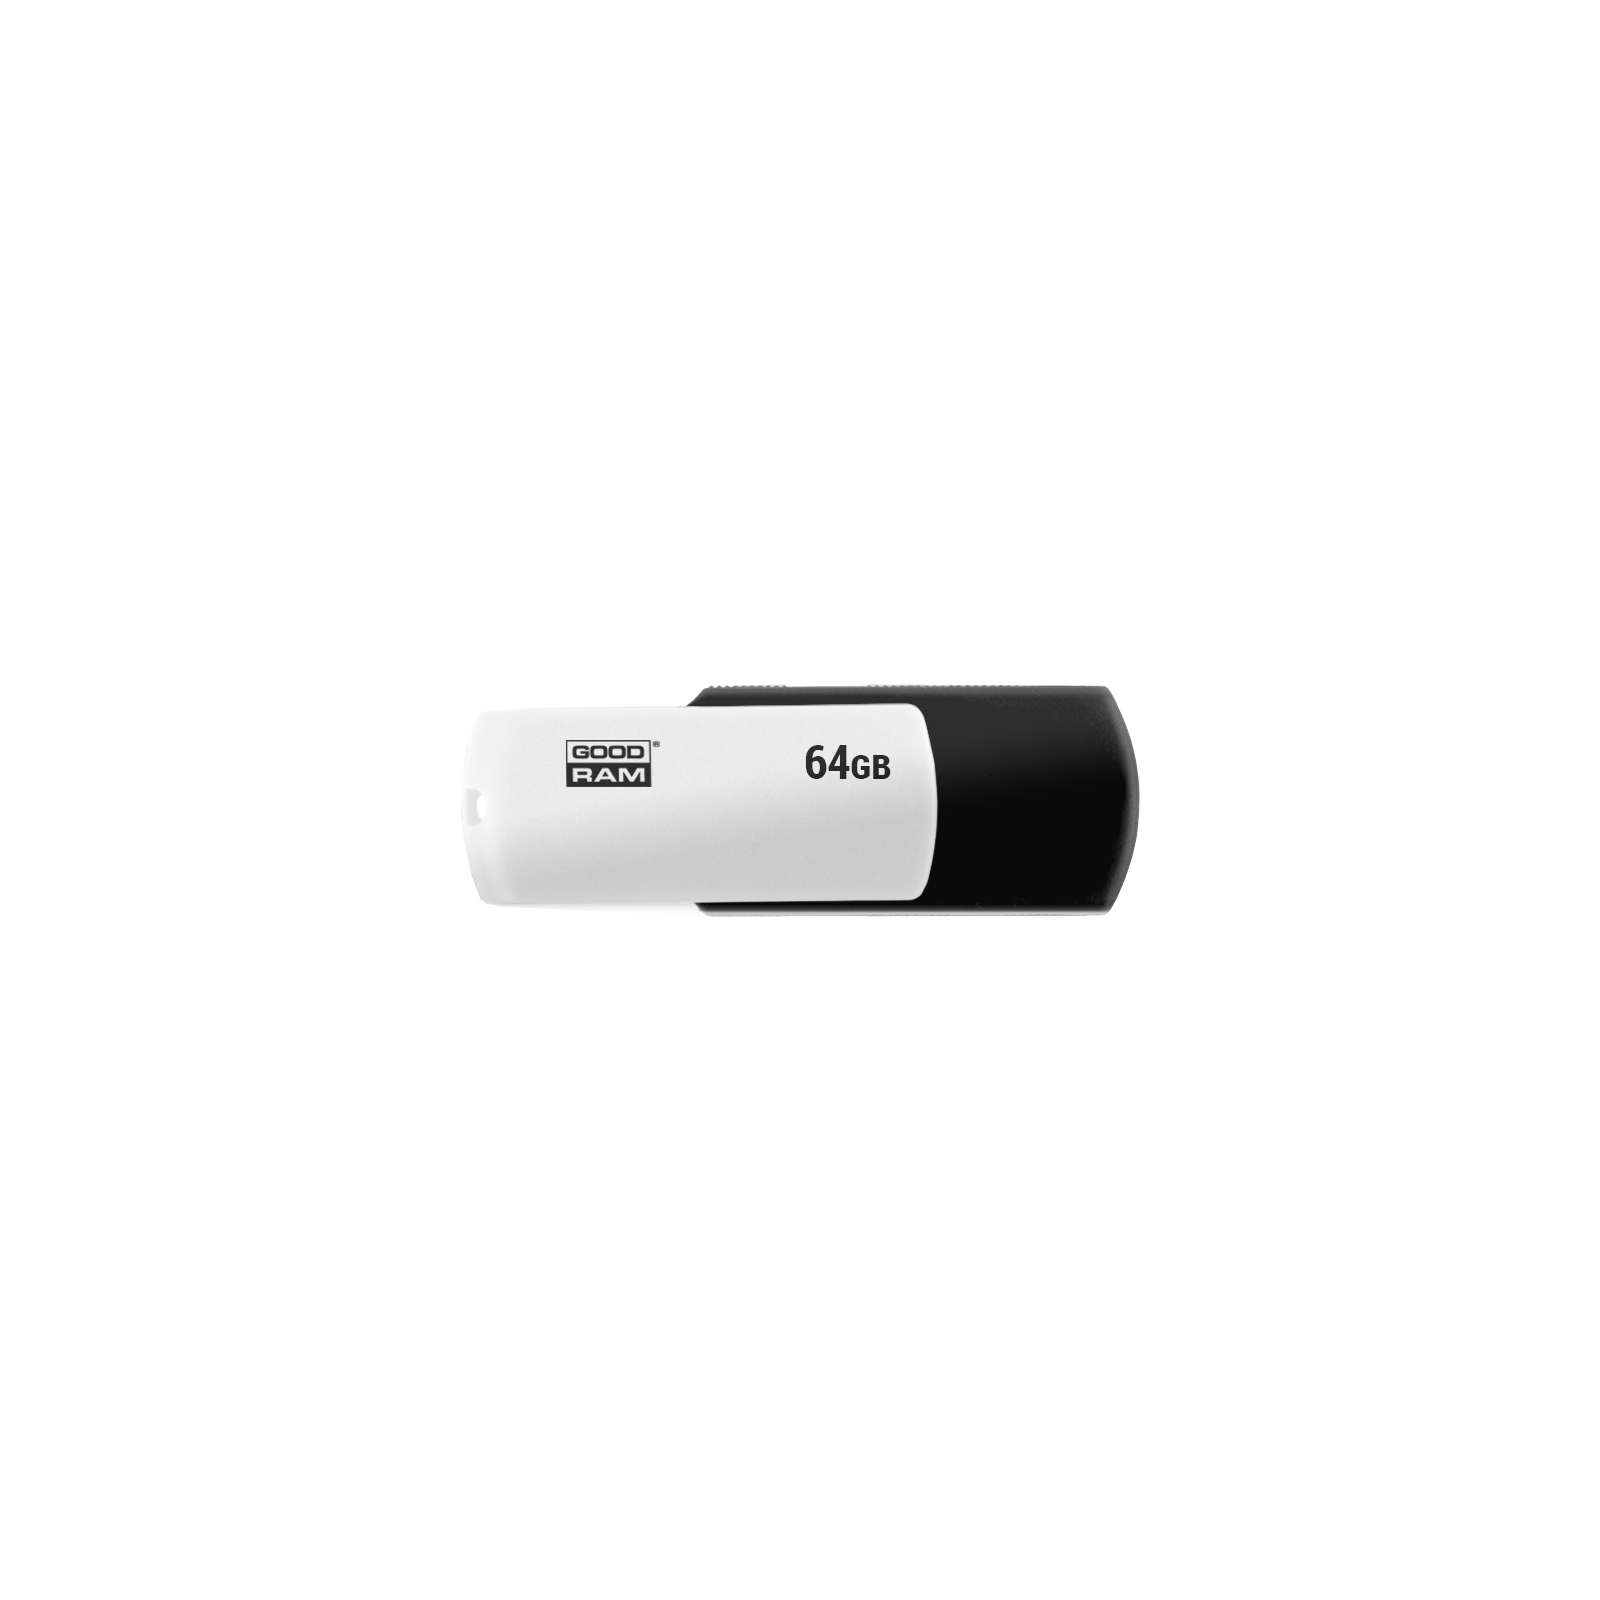 USB флеш накопитель Goodram 128GB UCO2 Colour Black&White USB 2.0 (UCO2-1280KWR11)